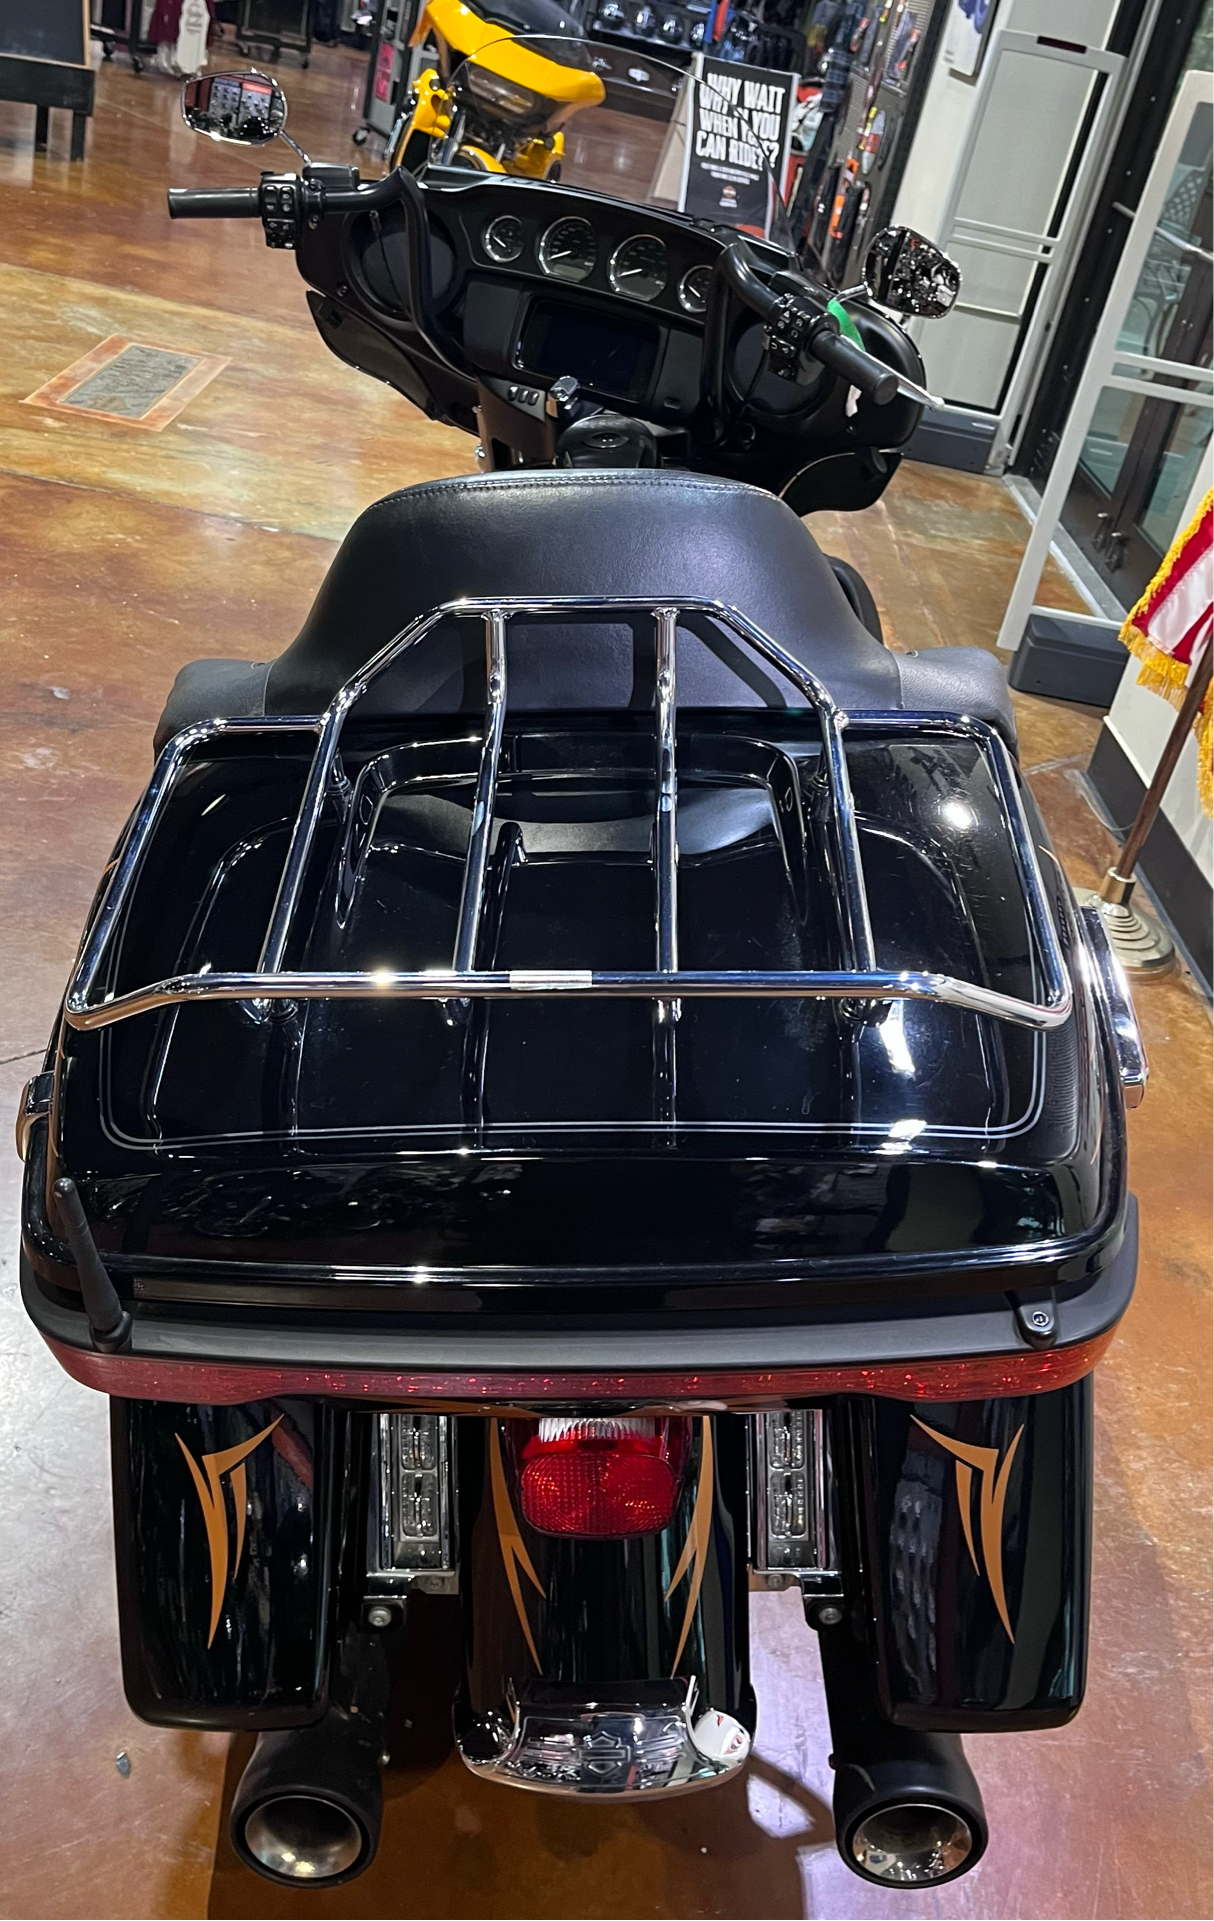 2019 Harley Electra Glide - Photo 2